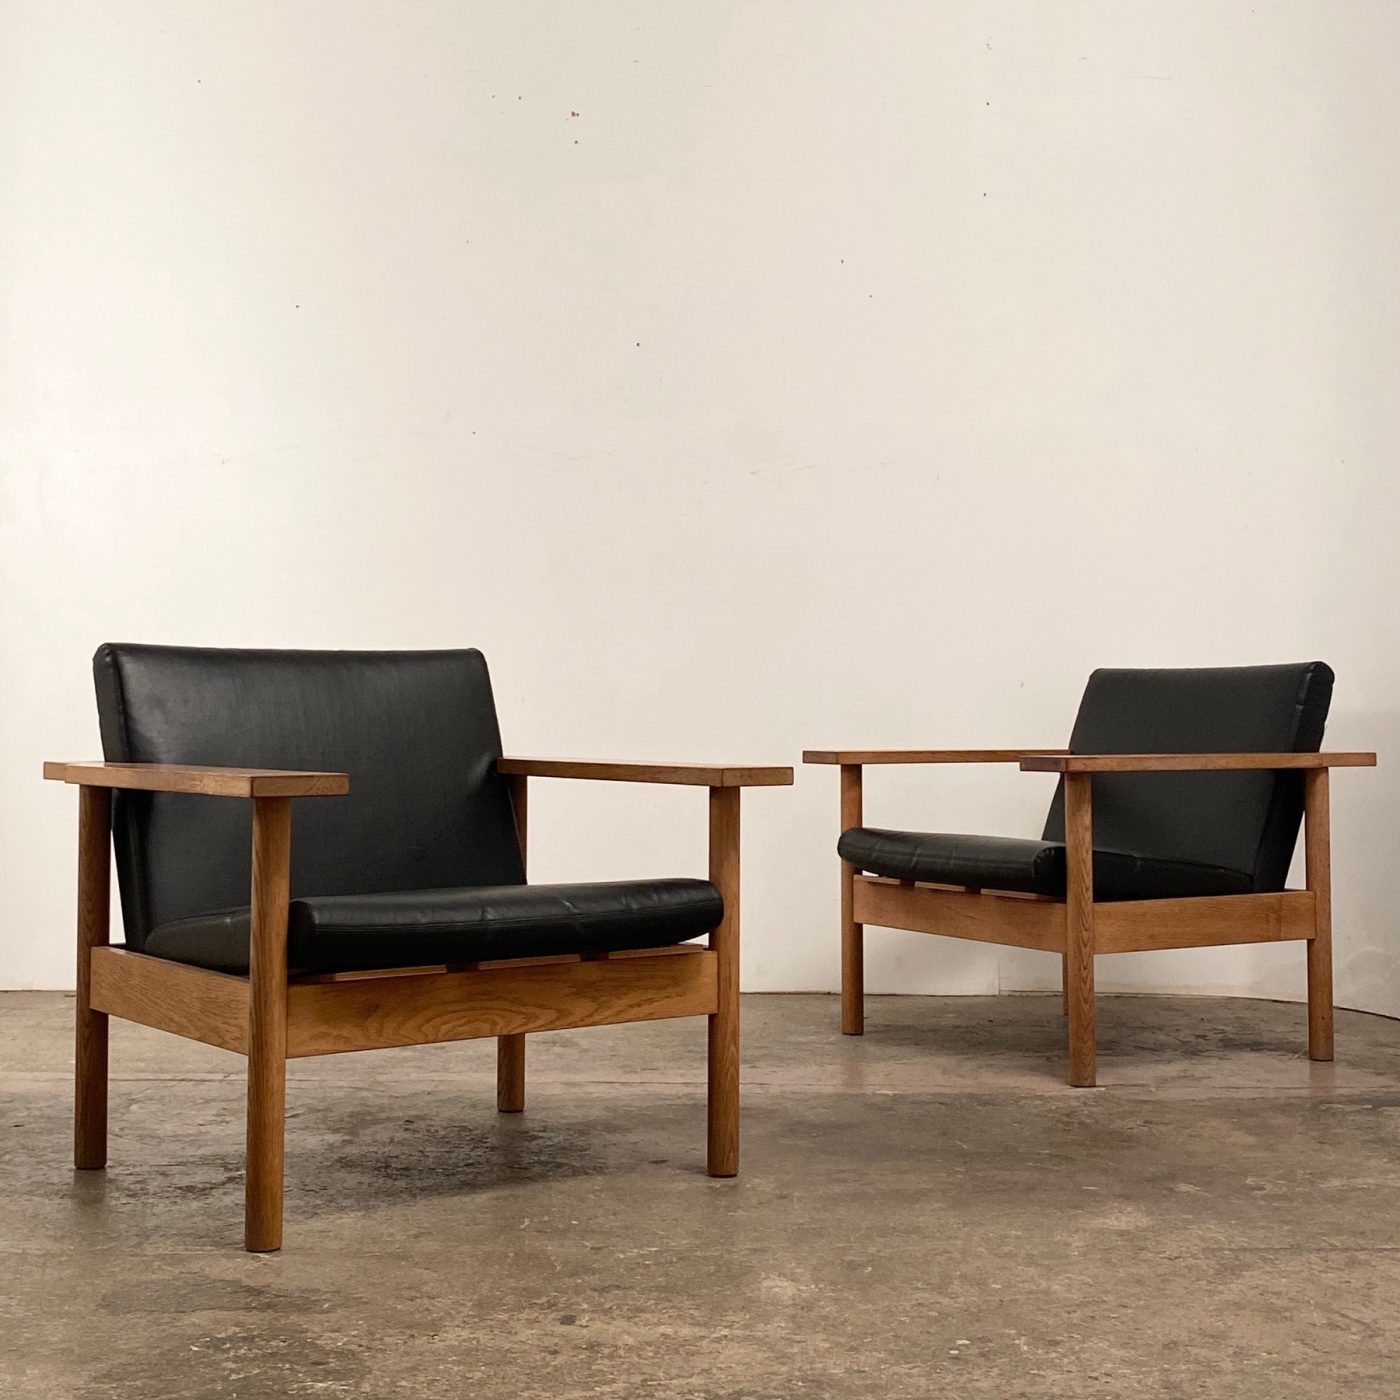 objet-vagabond-danish-chairs0006